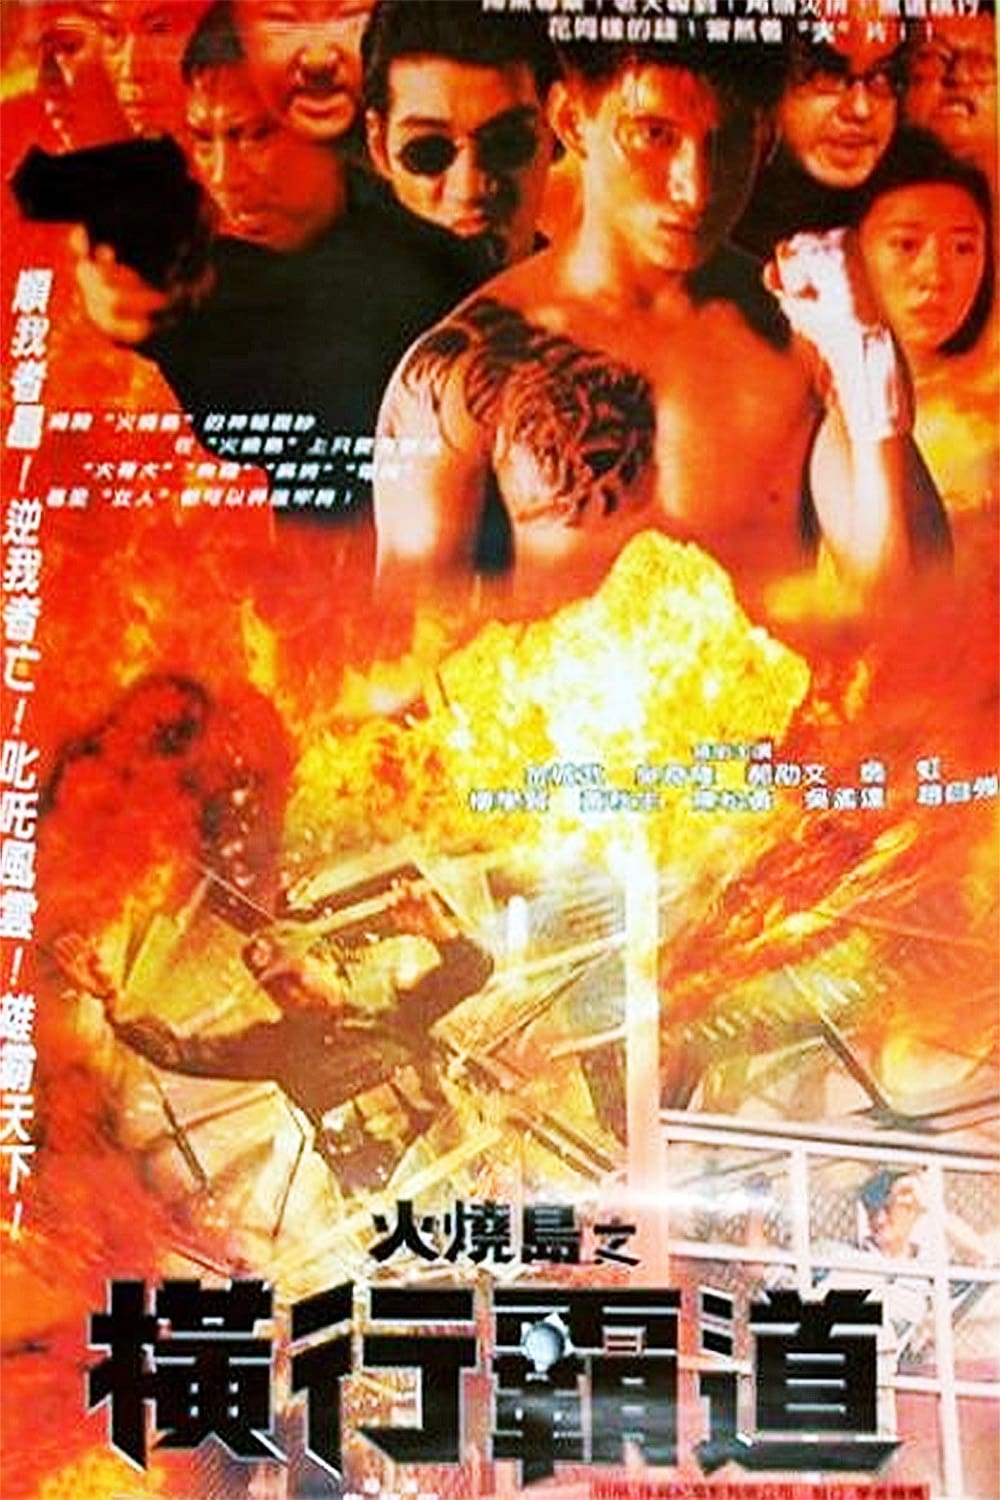 Jail in Burning Island (1997)